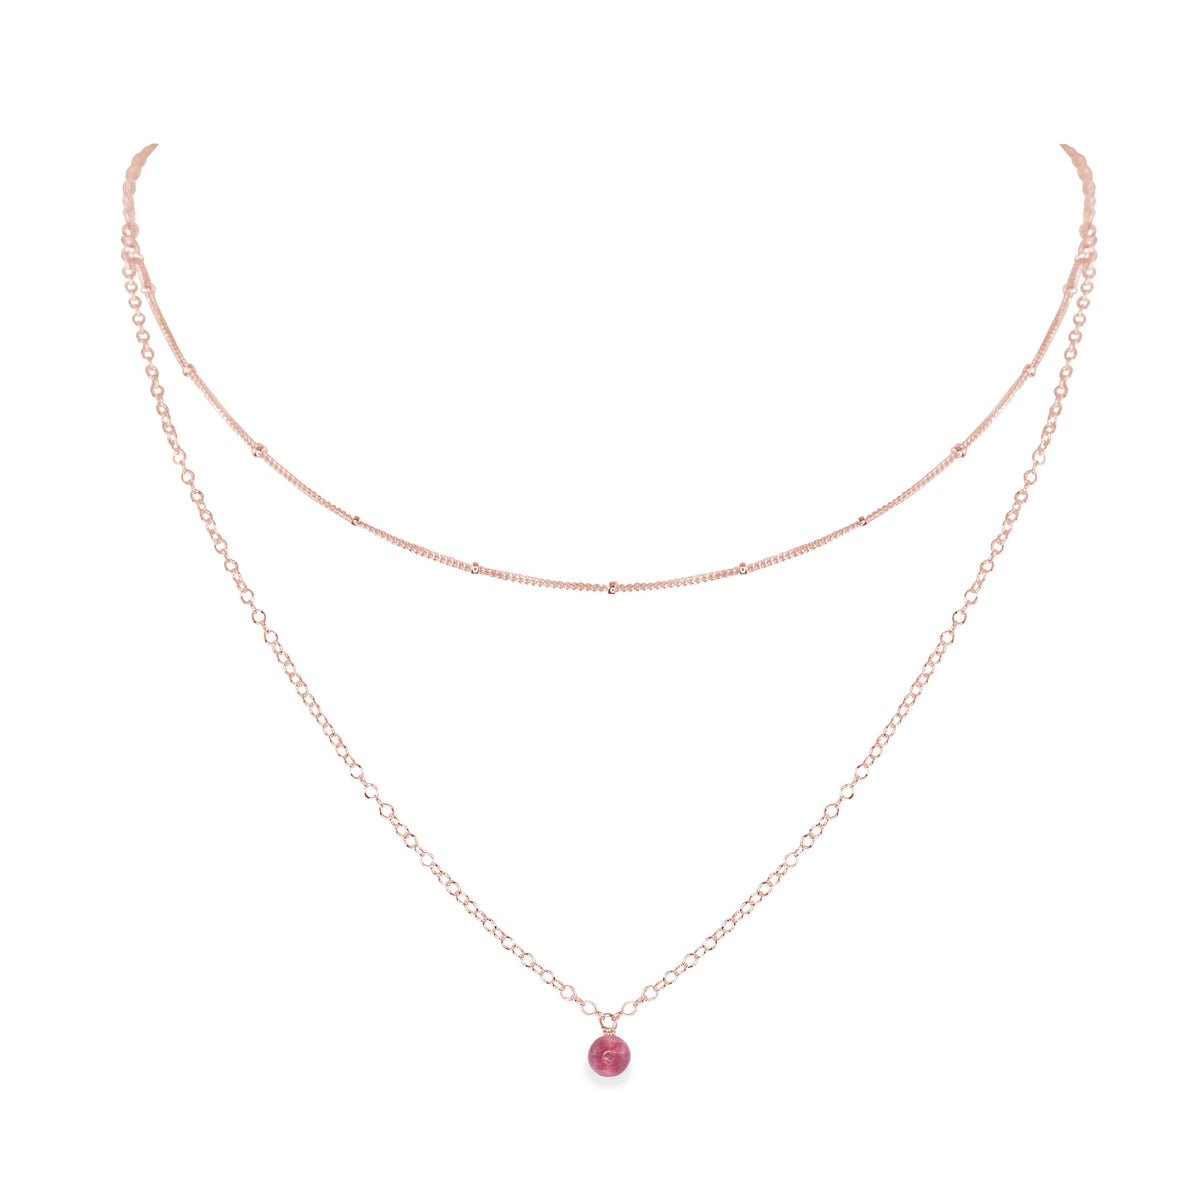 Layered Choker - Pink Tourmaline - 14K Rose Gold Fill - Luna Tide Handmade Jewellery